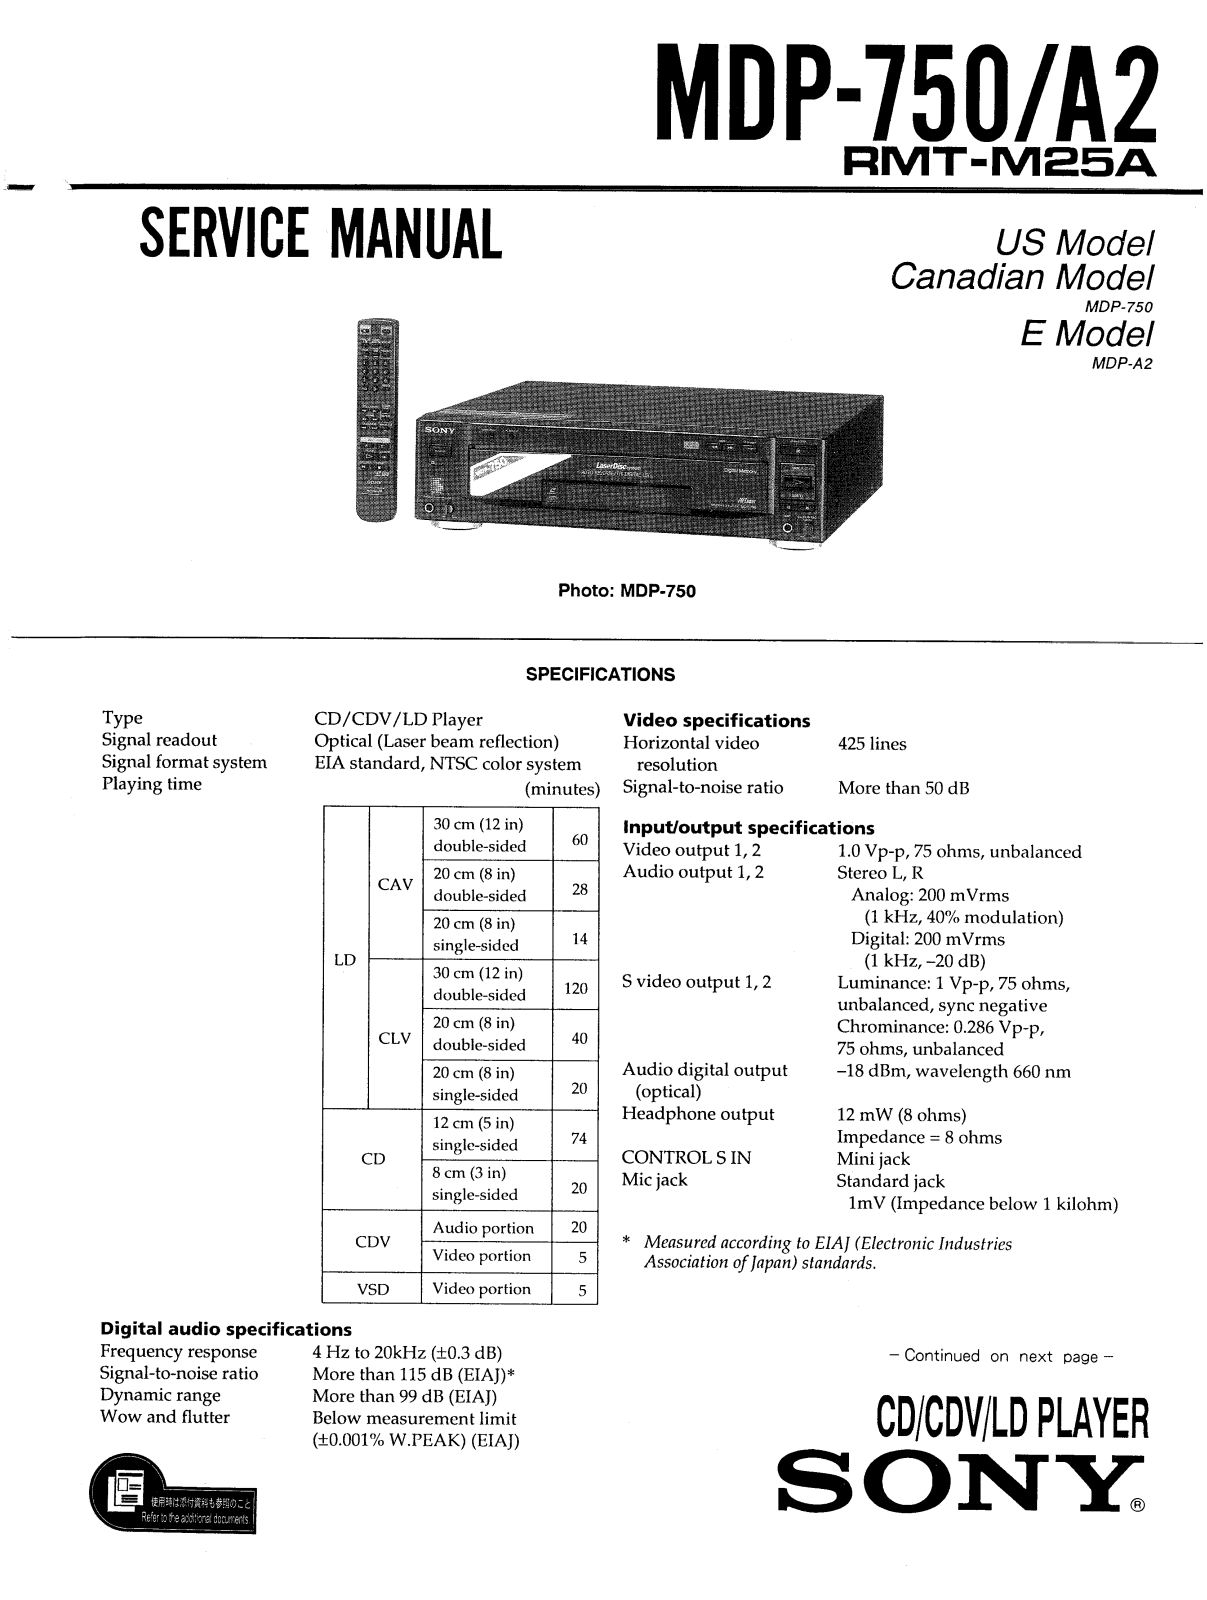 Sony MDP-750, MDPA-2 Service manual